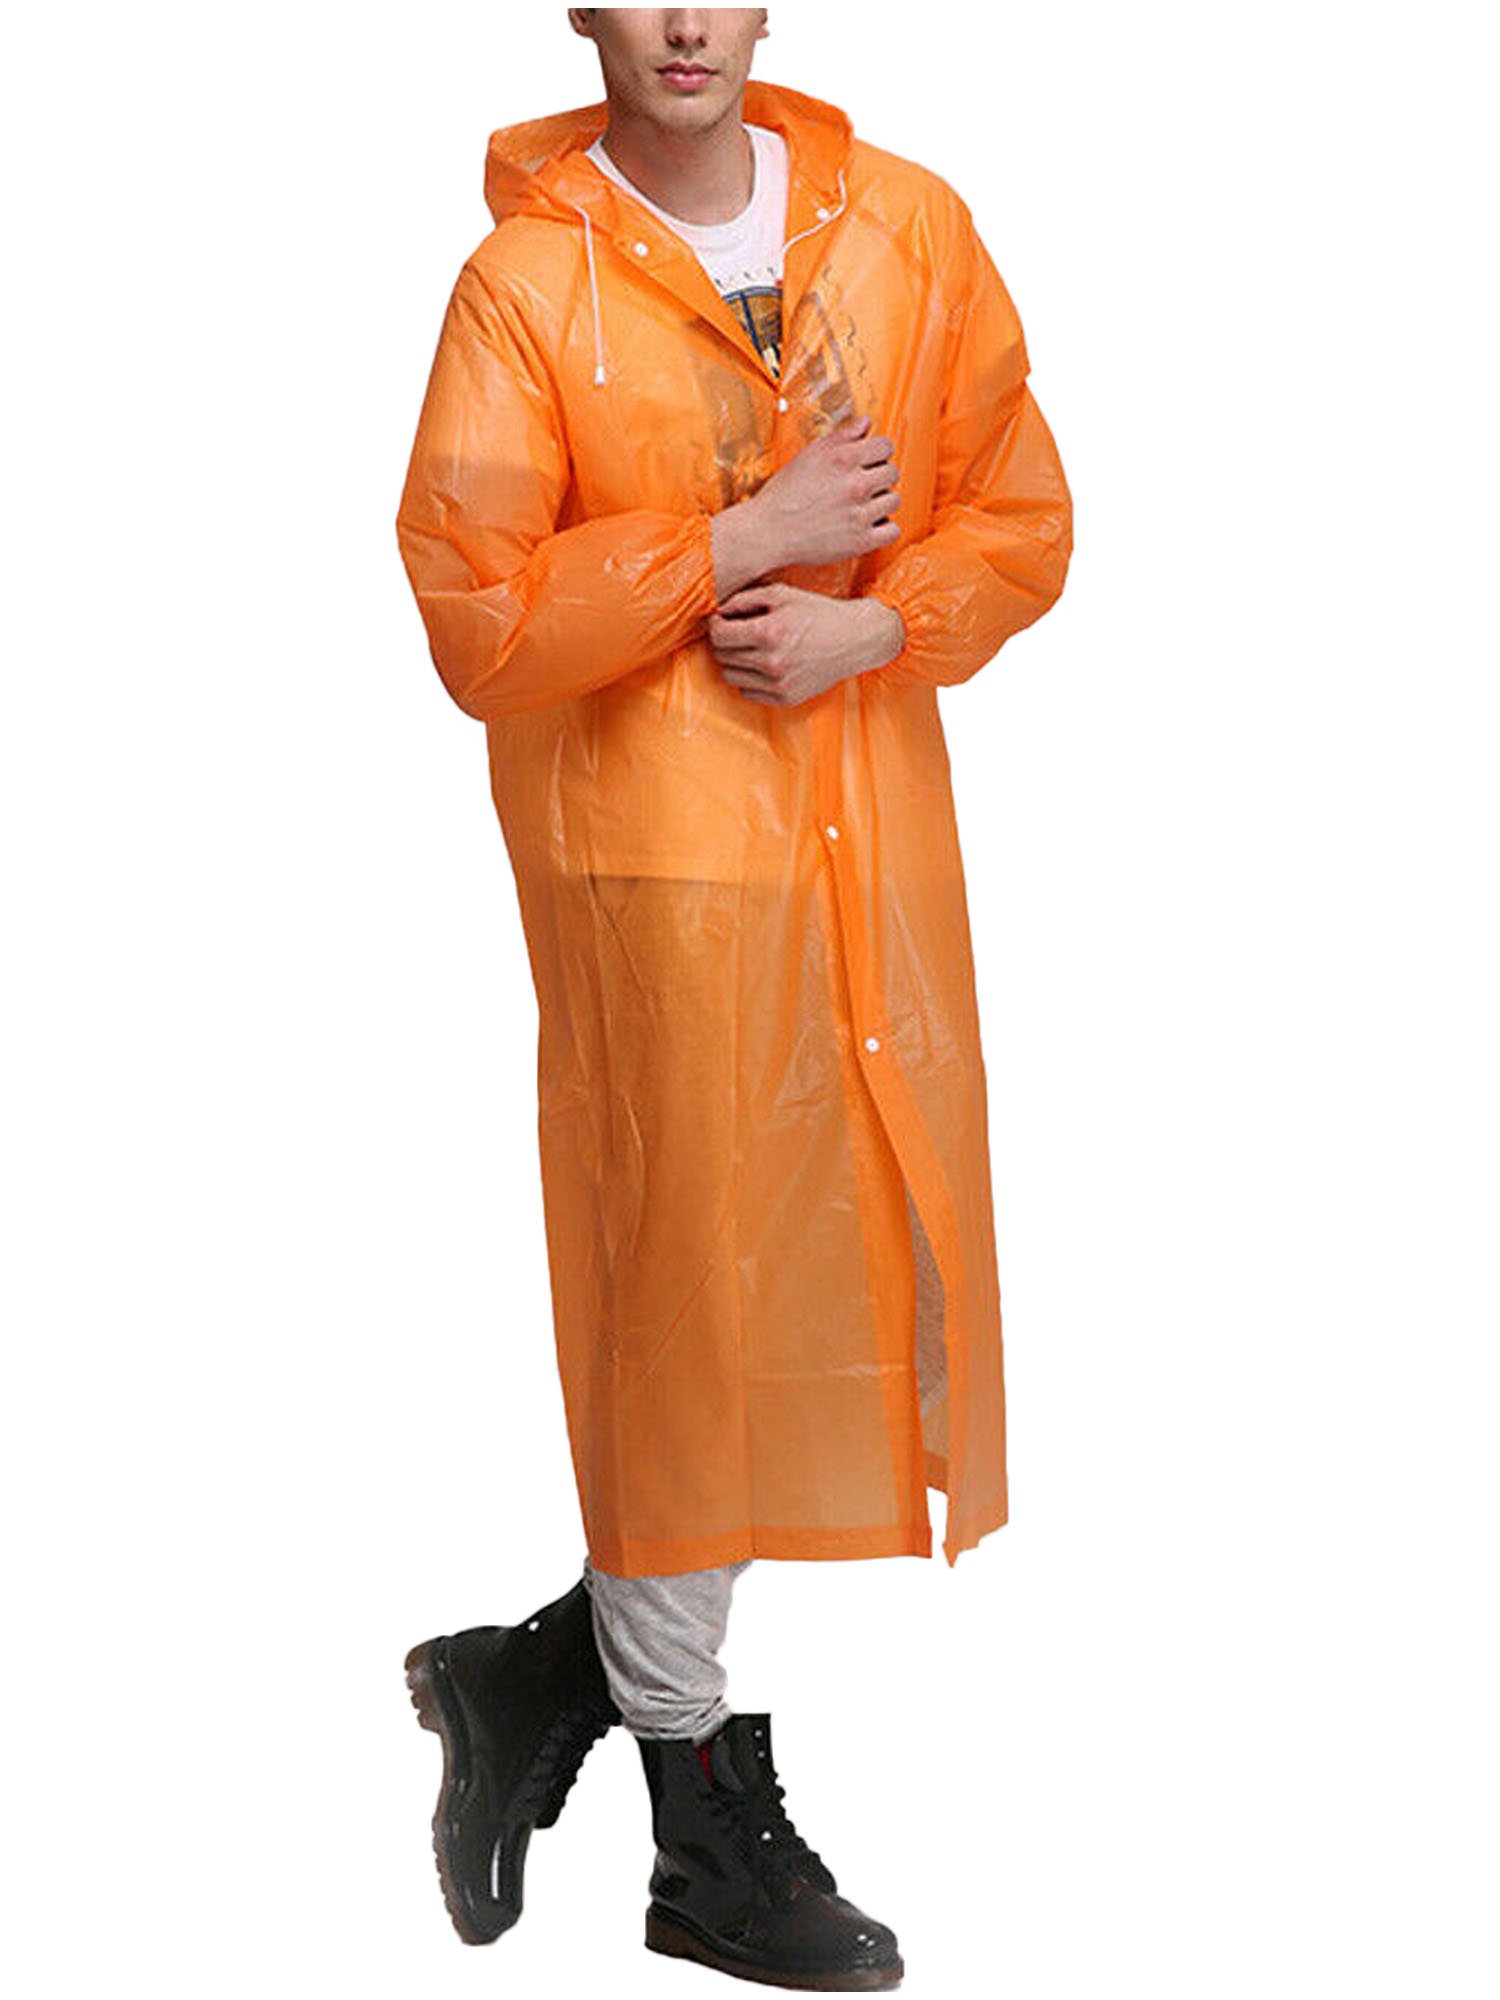 Nituyy Waterproof Jacket Clear EVA Raincoat Rain Coat Hooded Poncho Rainwear Unisex - image 1 of 2